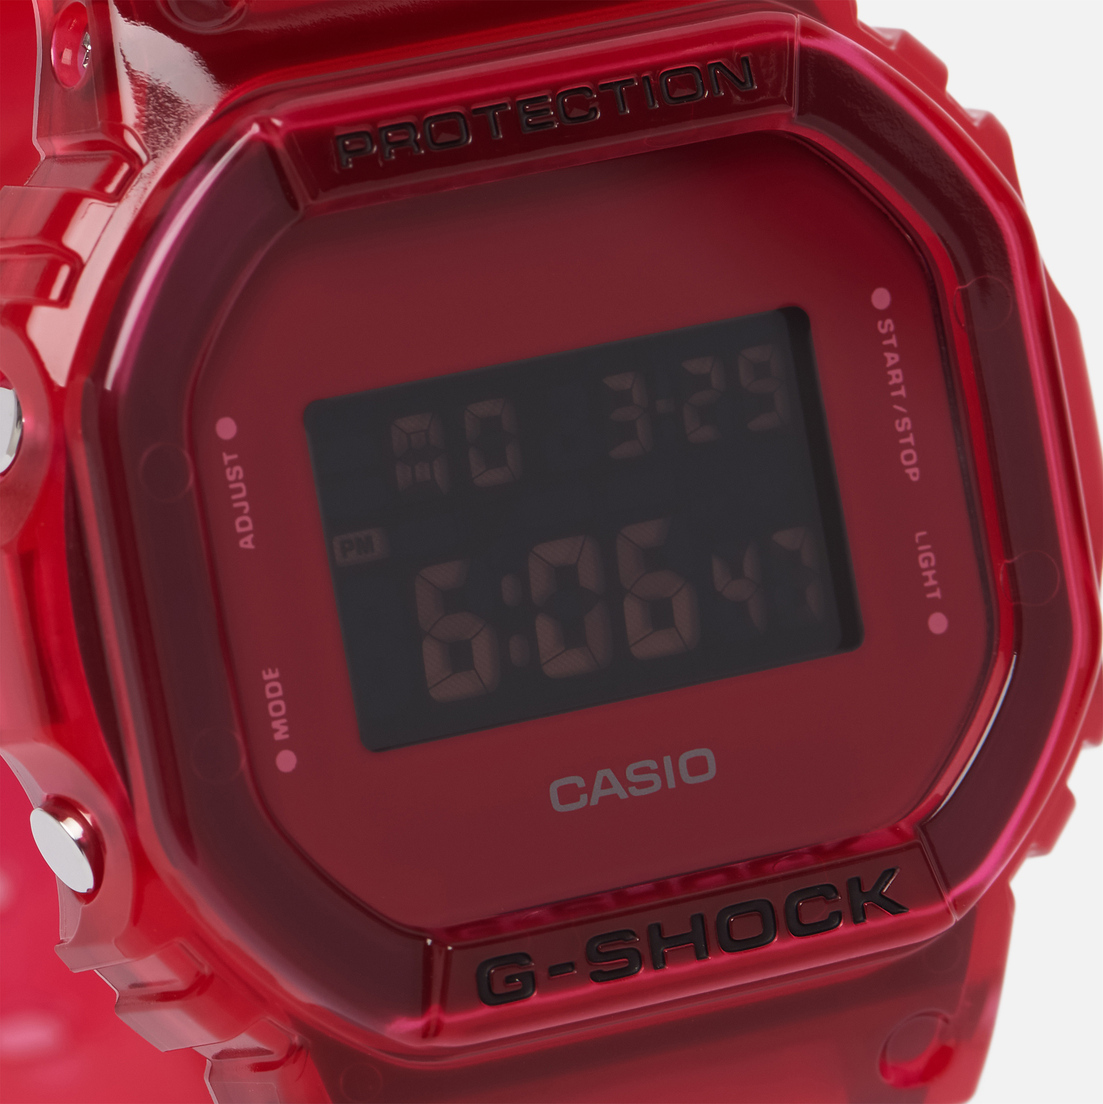 CASIO Наручные часы G-SHOCK DW-5600SB-4ER